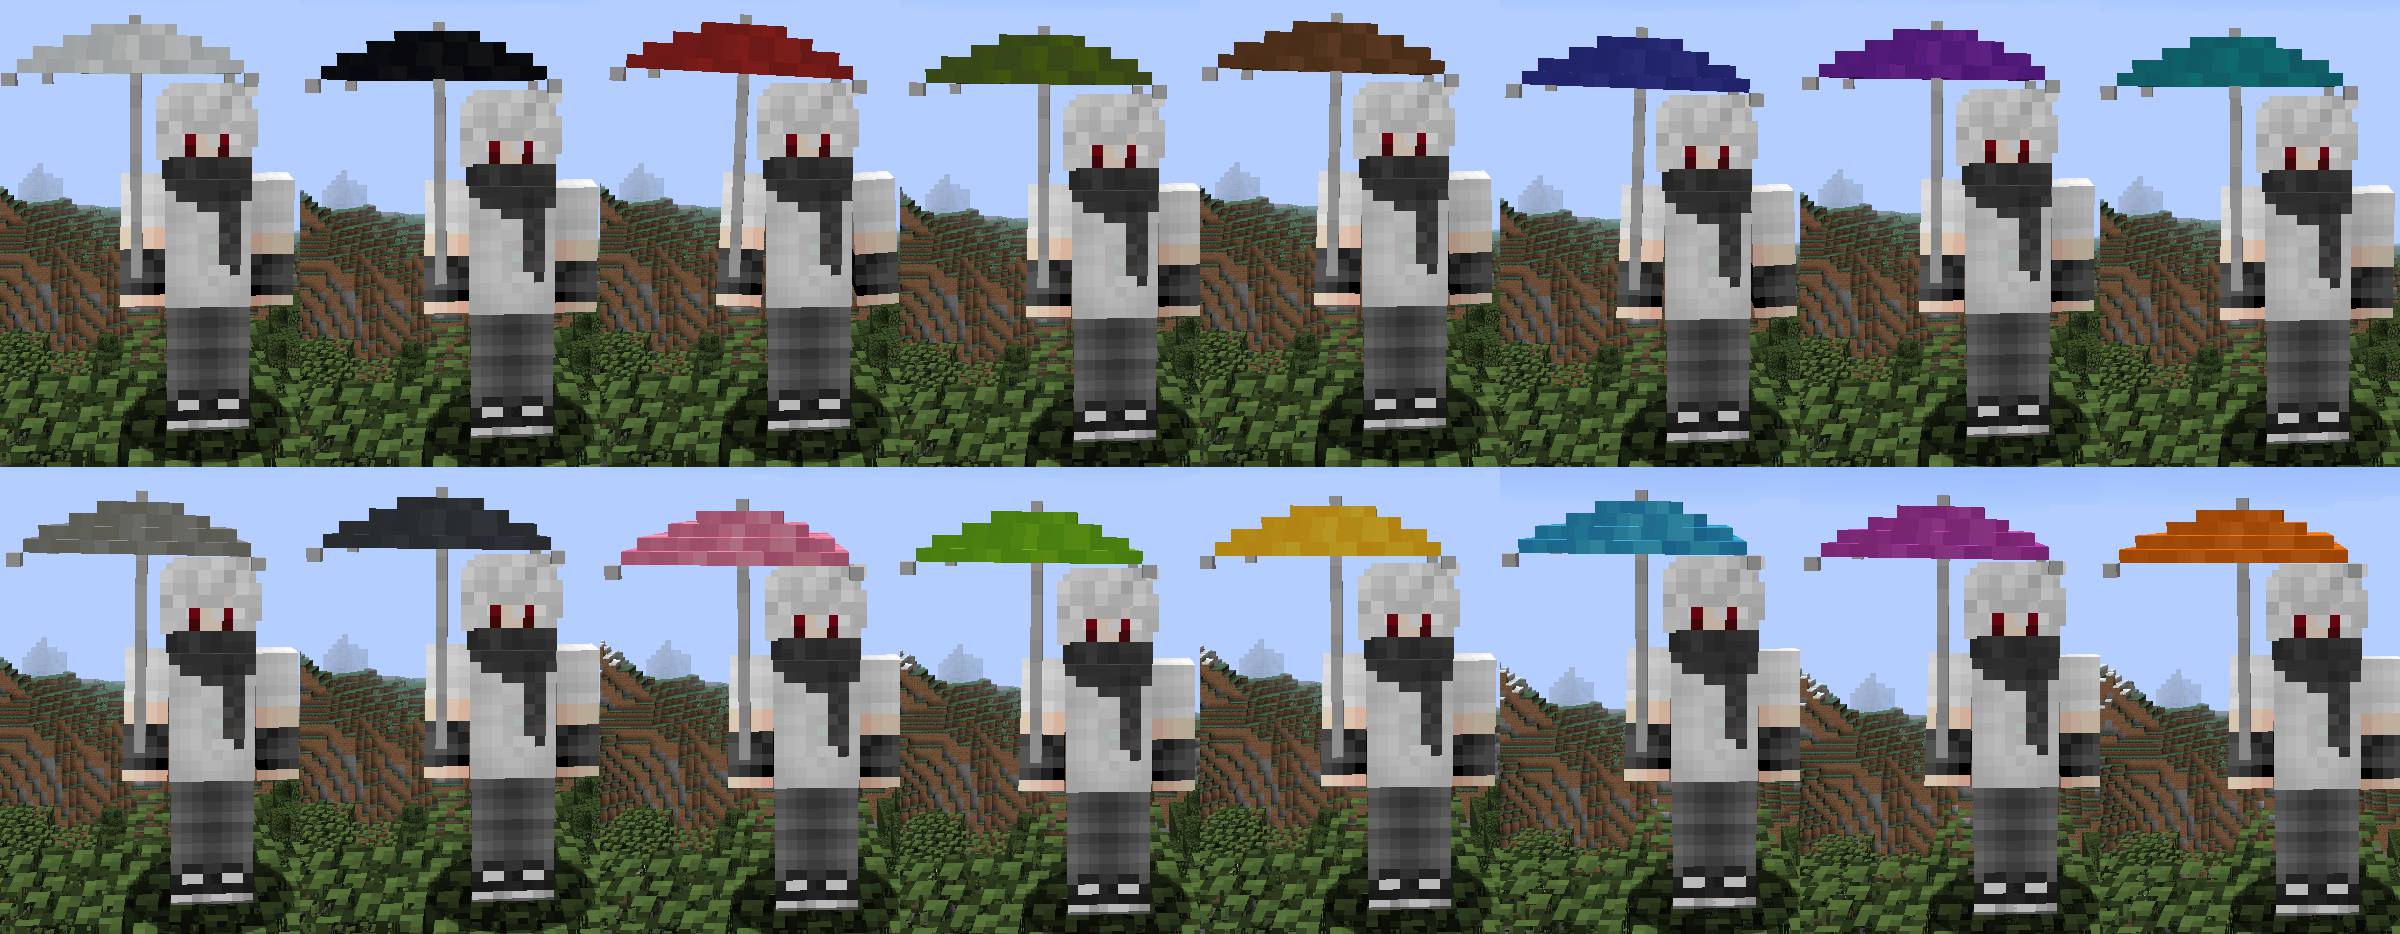 Vampires Need Umbrellas mod for minecraft 21